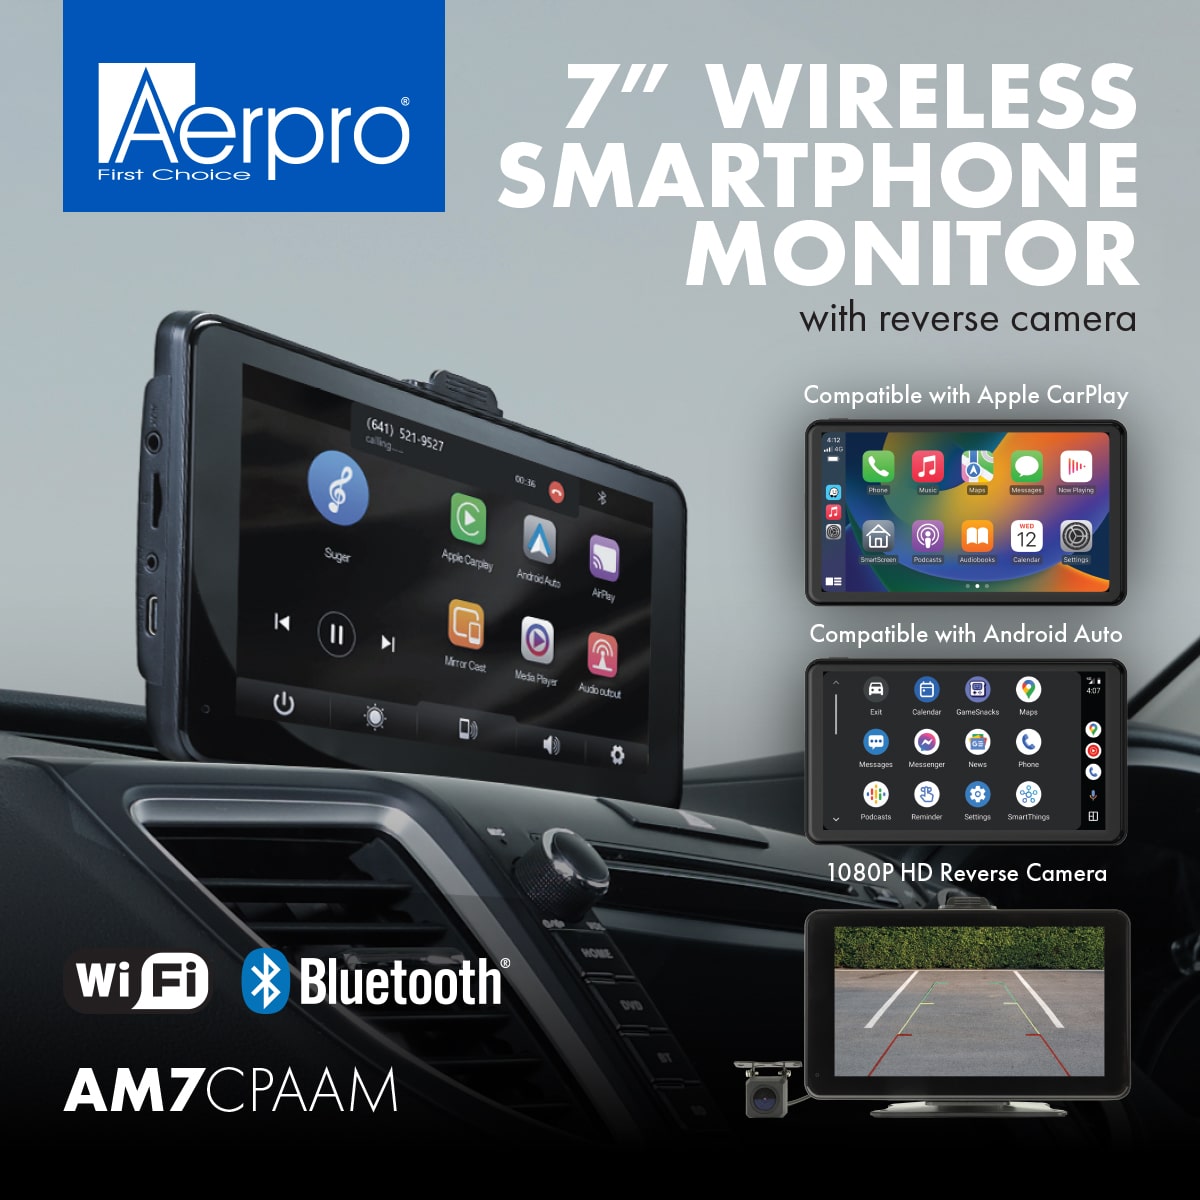 Aerpro AM7CPAAM 7 inch Wireless Smartphone Monitor With Reverse Camera